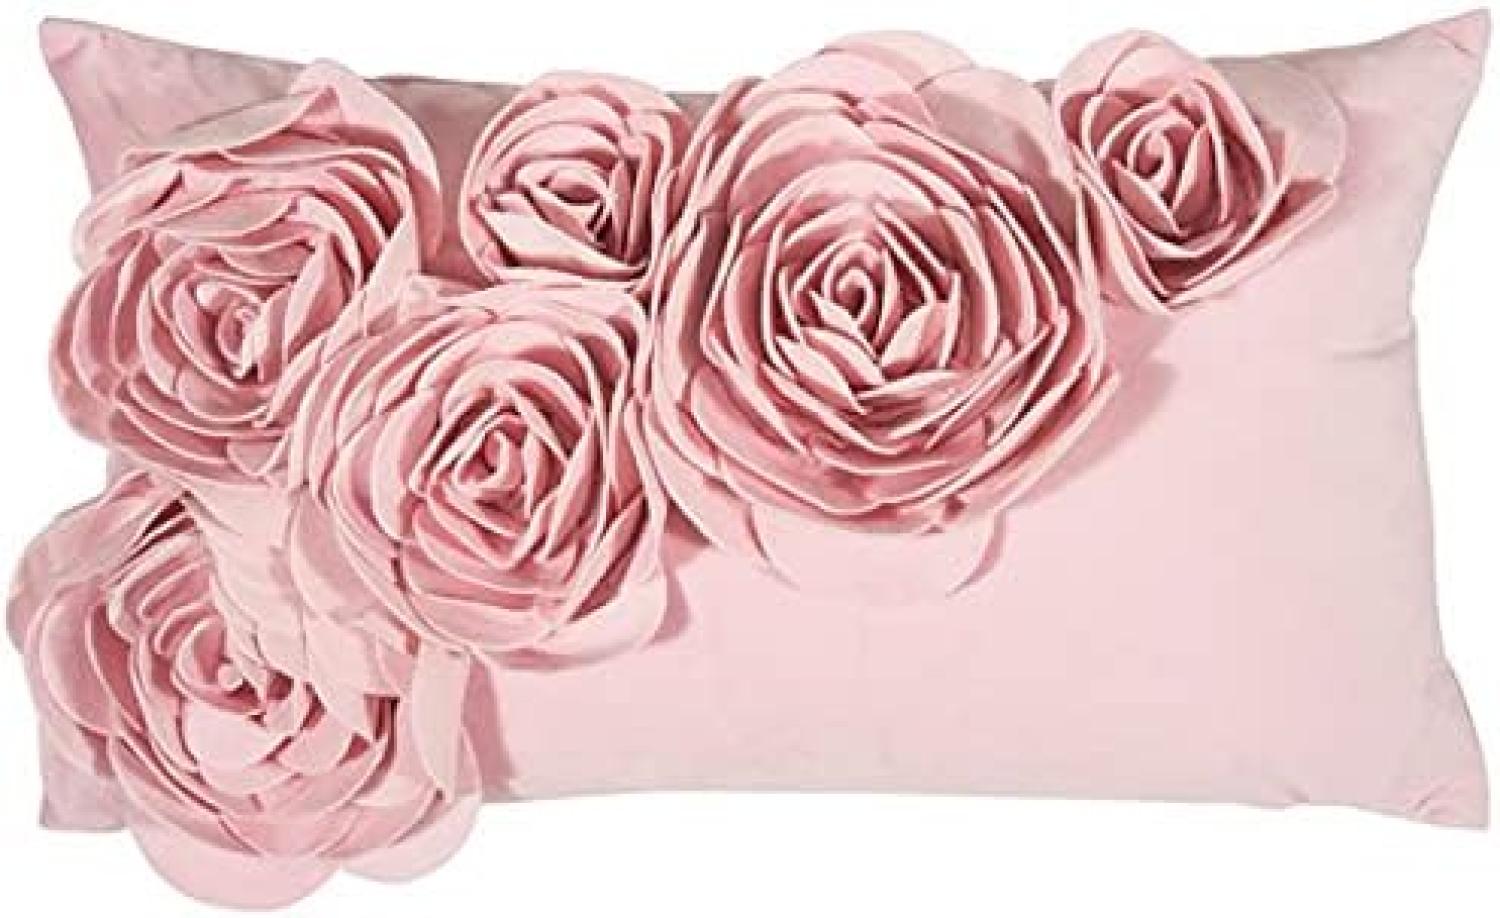 PAD Kissenhülle Samt Floral Rose (30x50cm) 13599 Bild 1